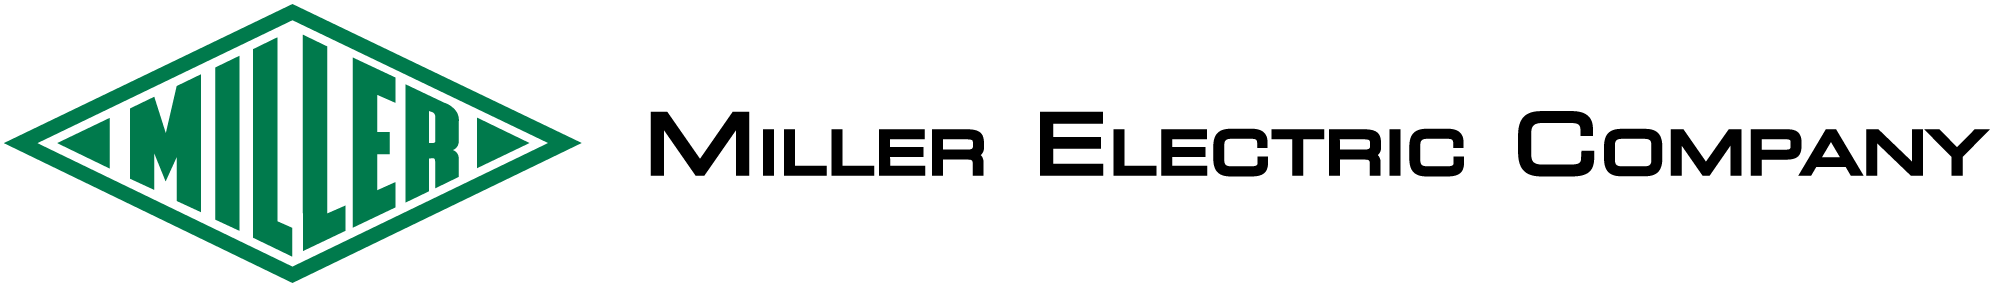 miller-electric-logo-black